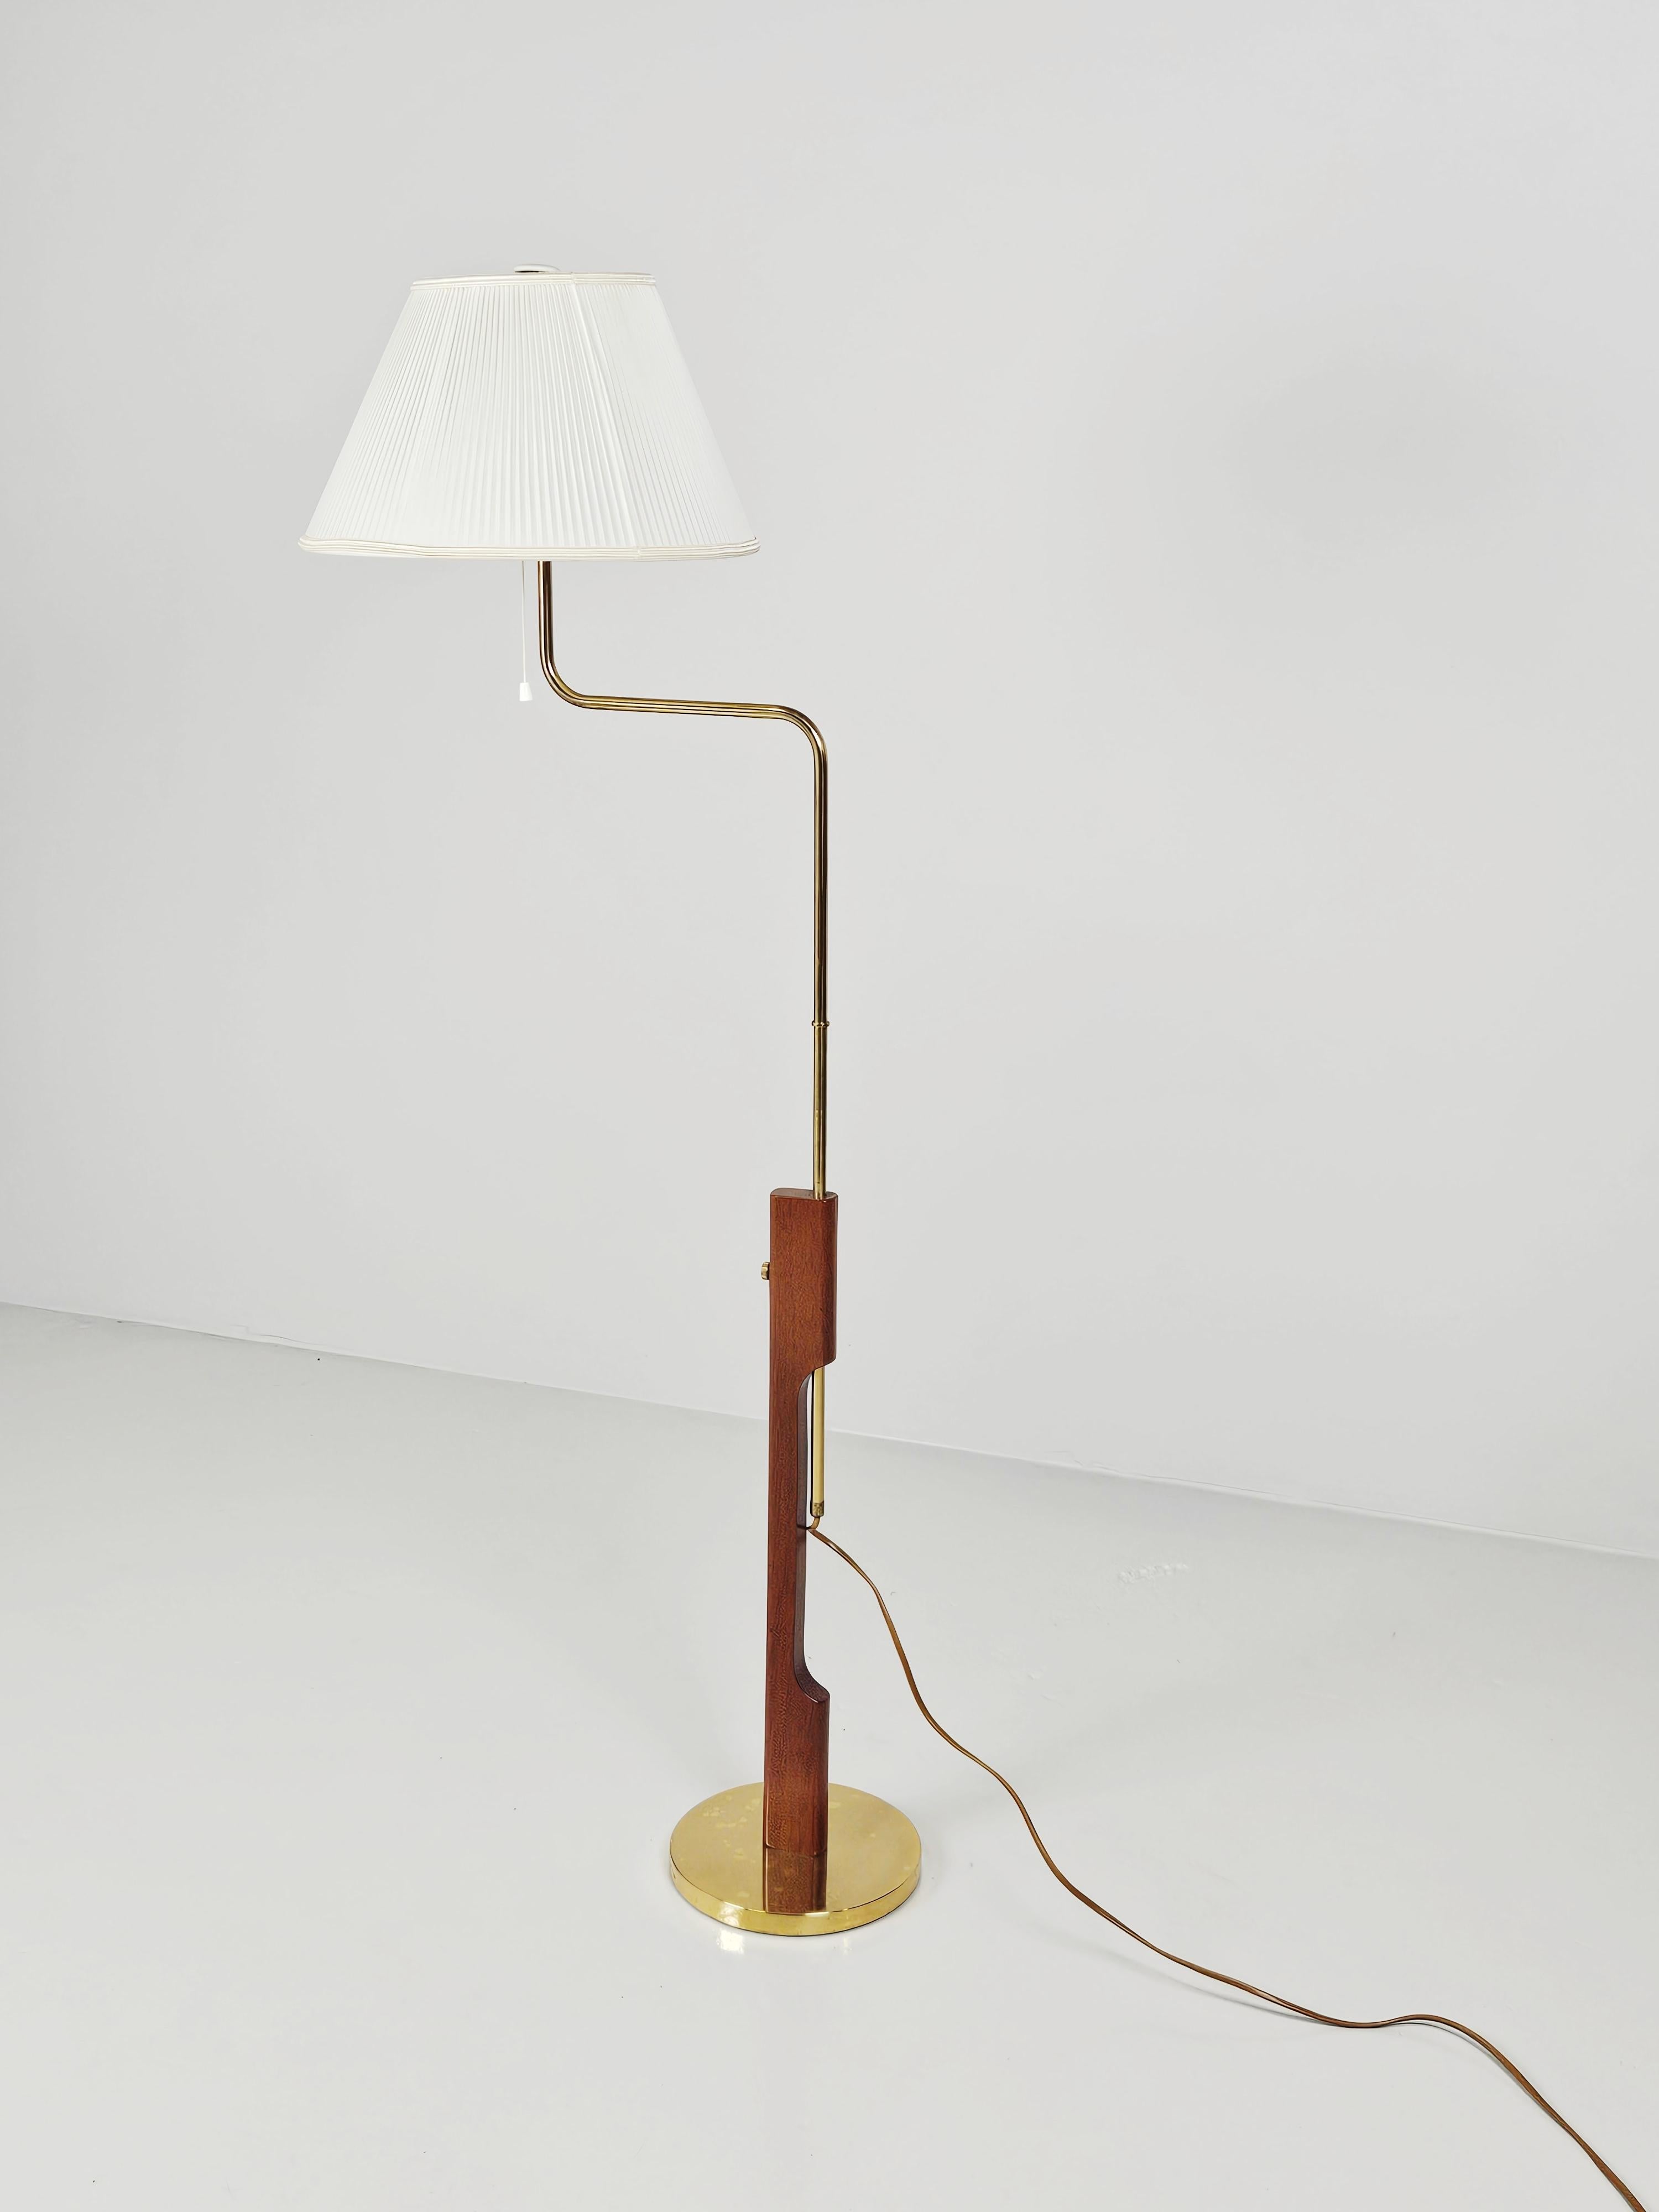 Brass Adjustable floor lamp by Bergboms, model G-82A, teak and brass, Sweden, 1960s For Sale